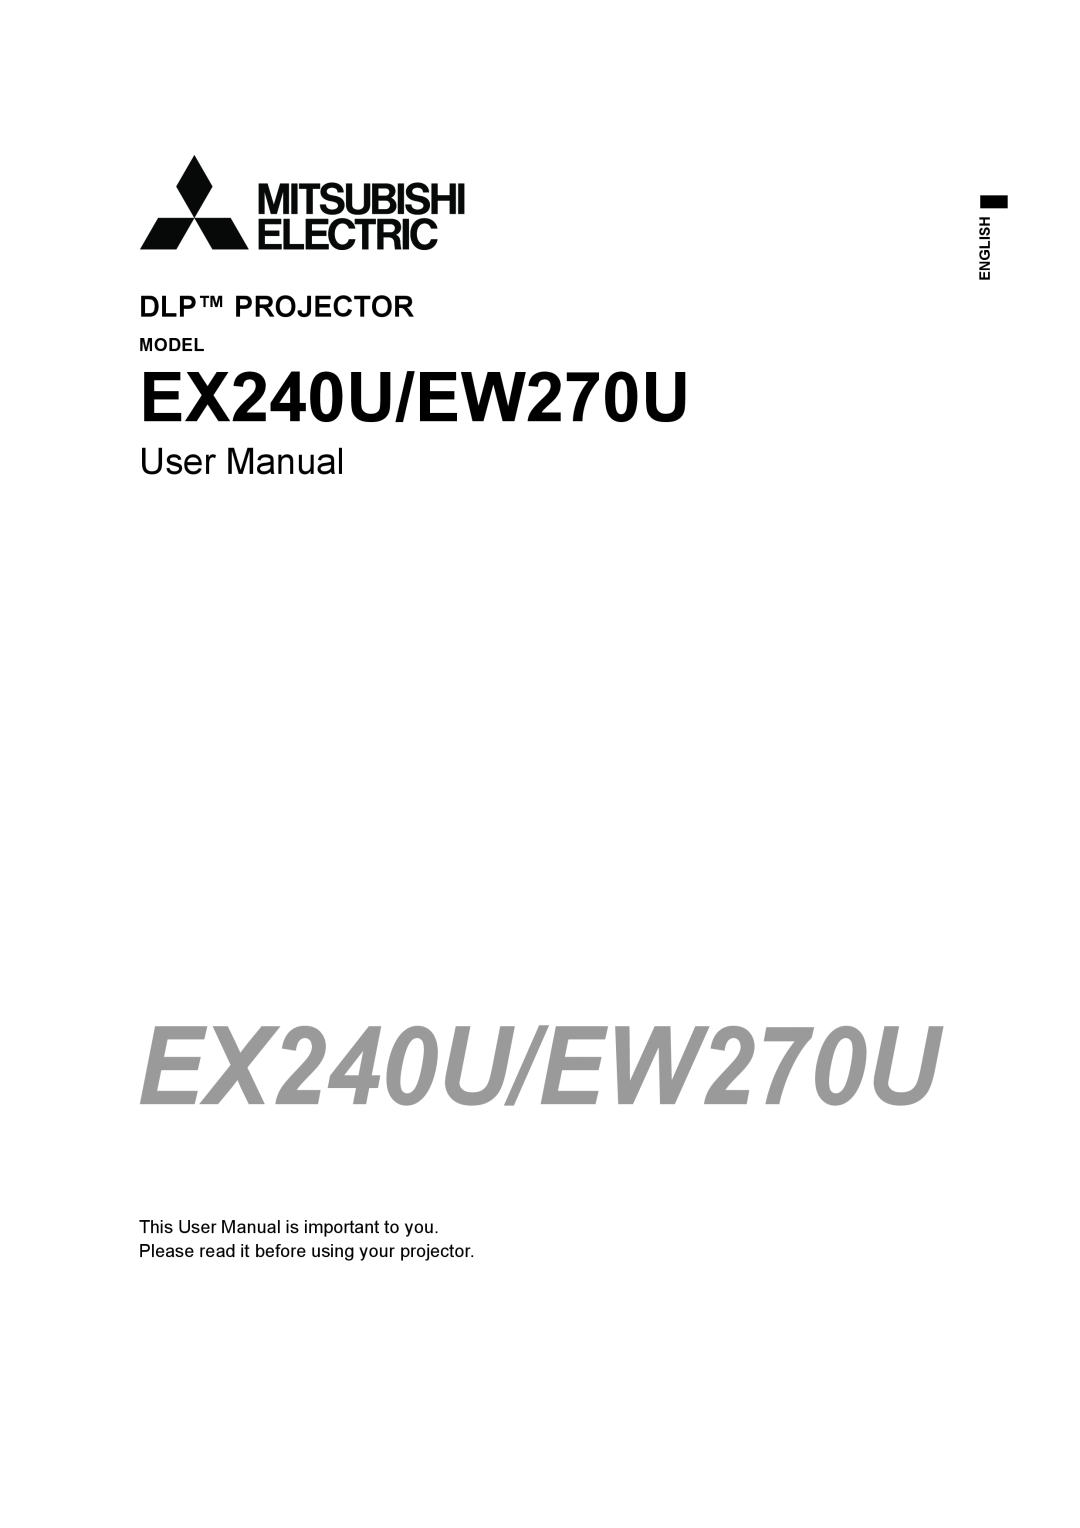 Mitsubishi Electronics user manual EX240U/EW270U, User Manual, Dlp Projector 